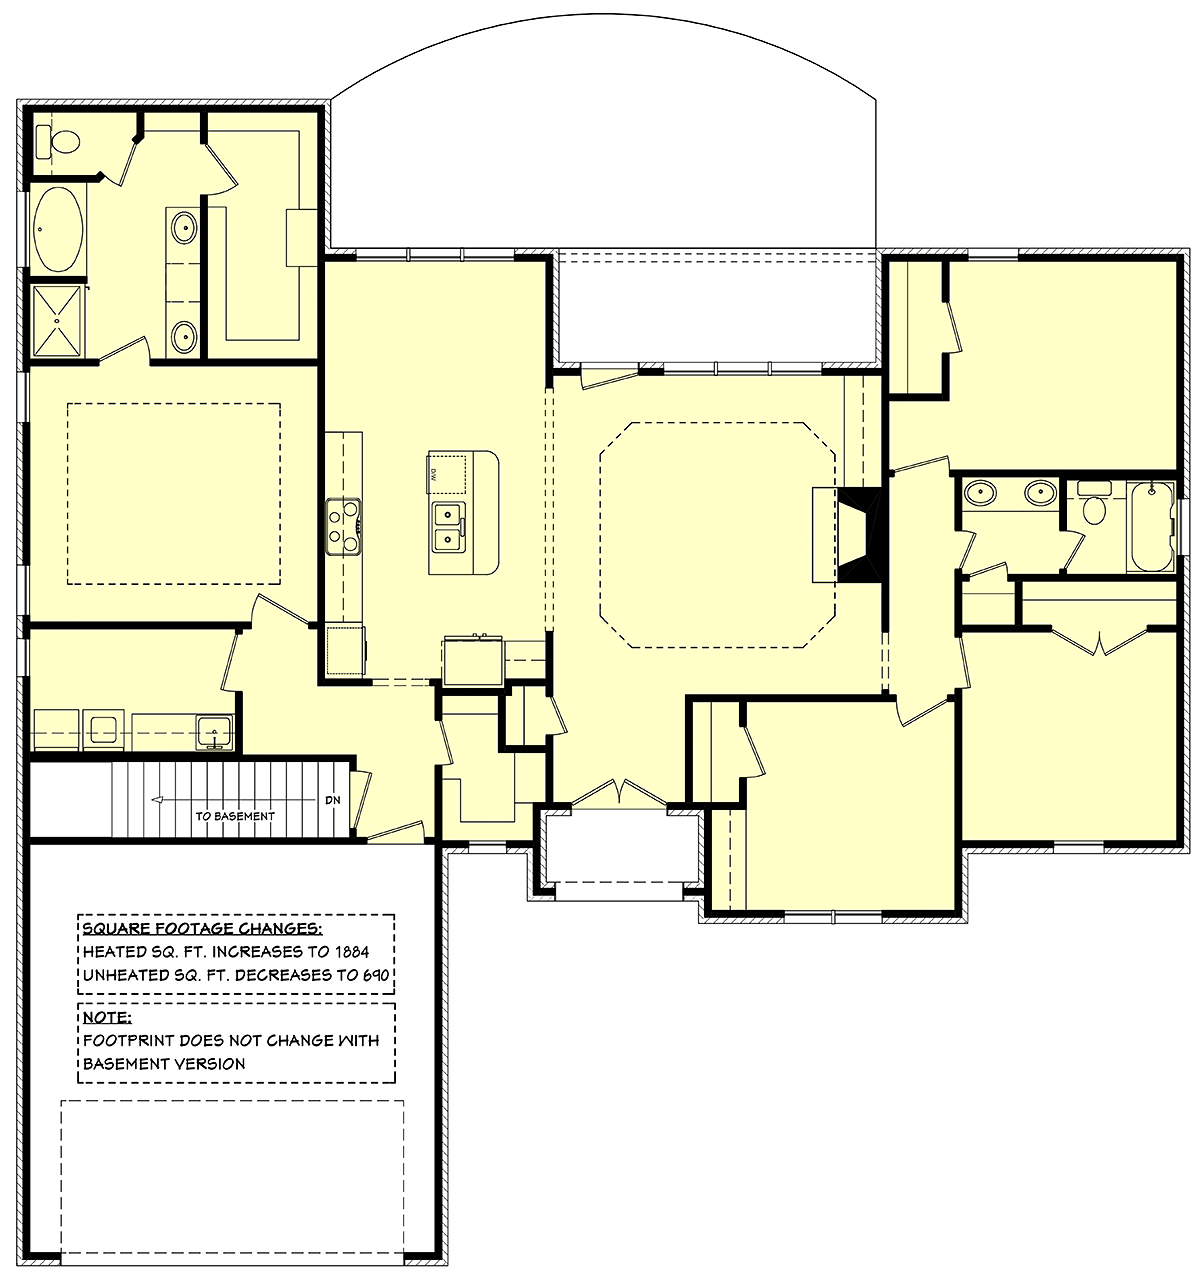 House Plan 51904 Alternate Level One